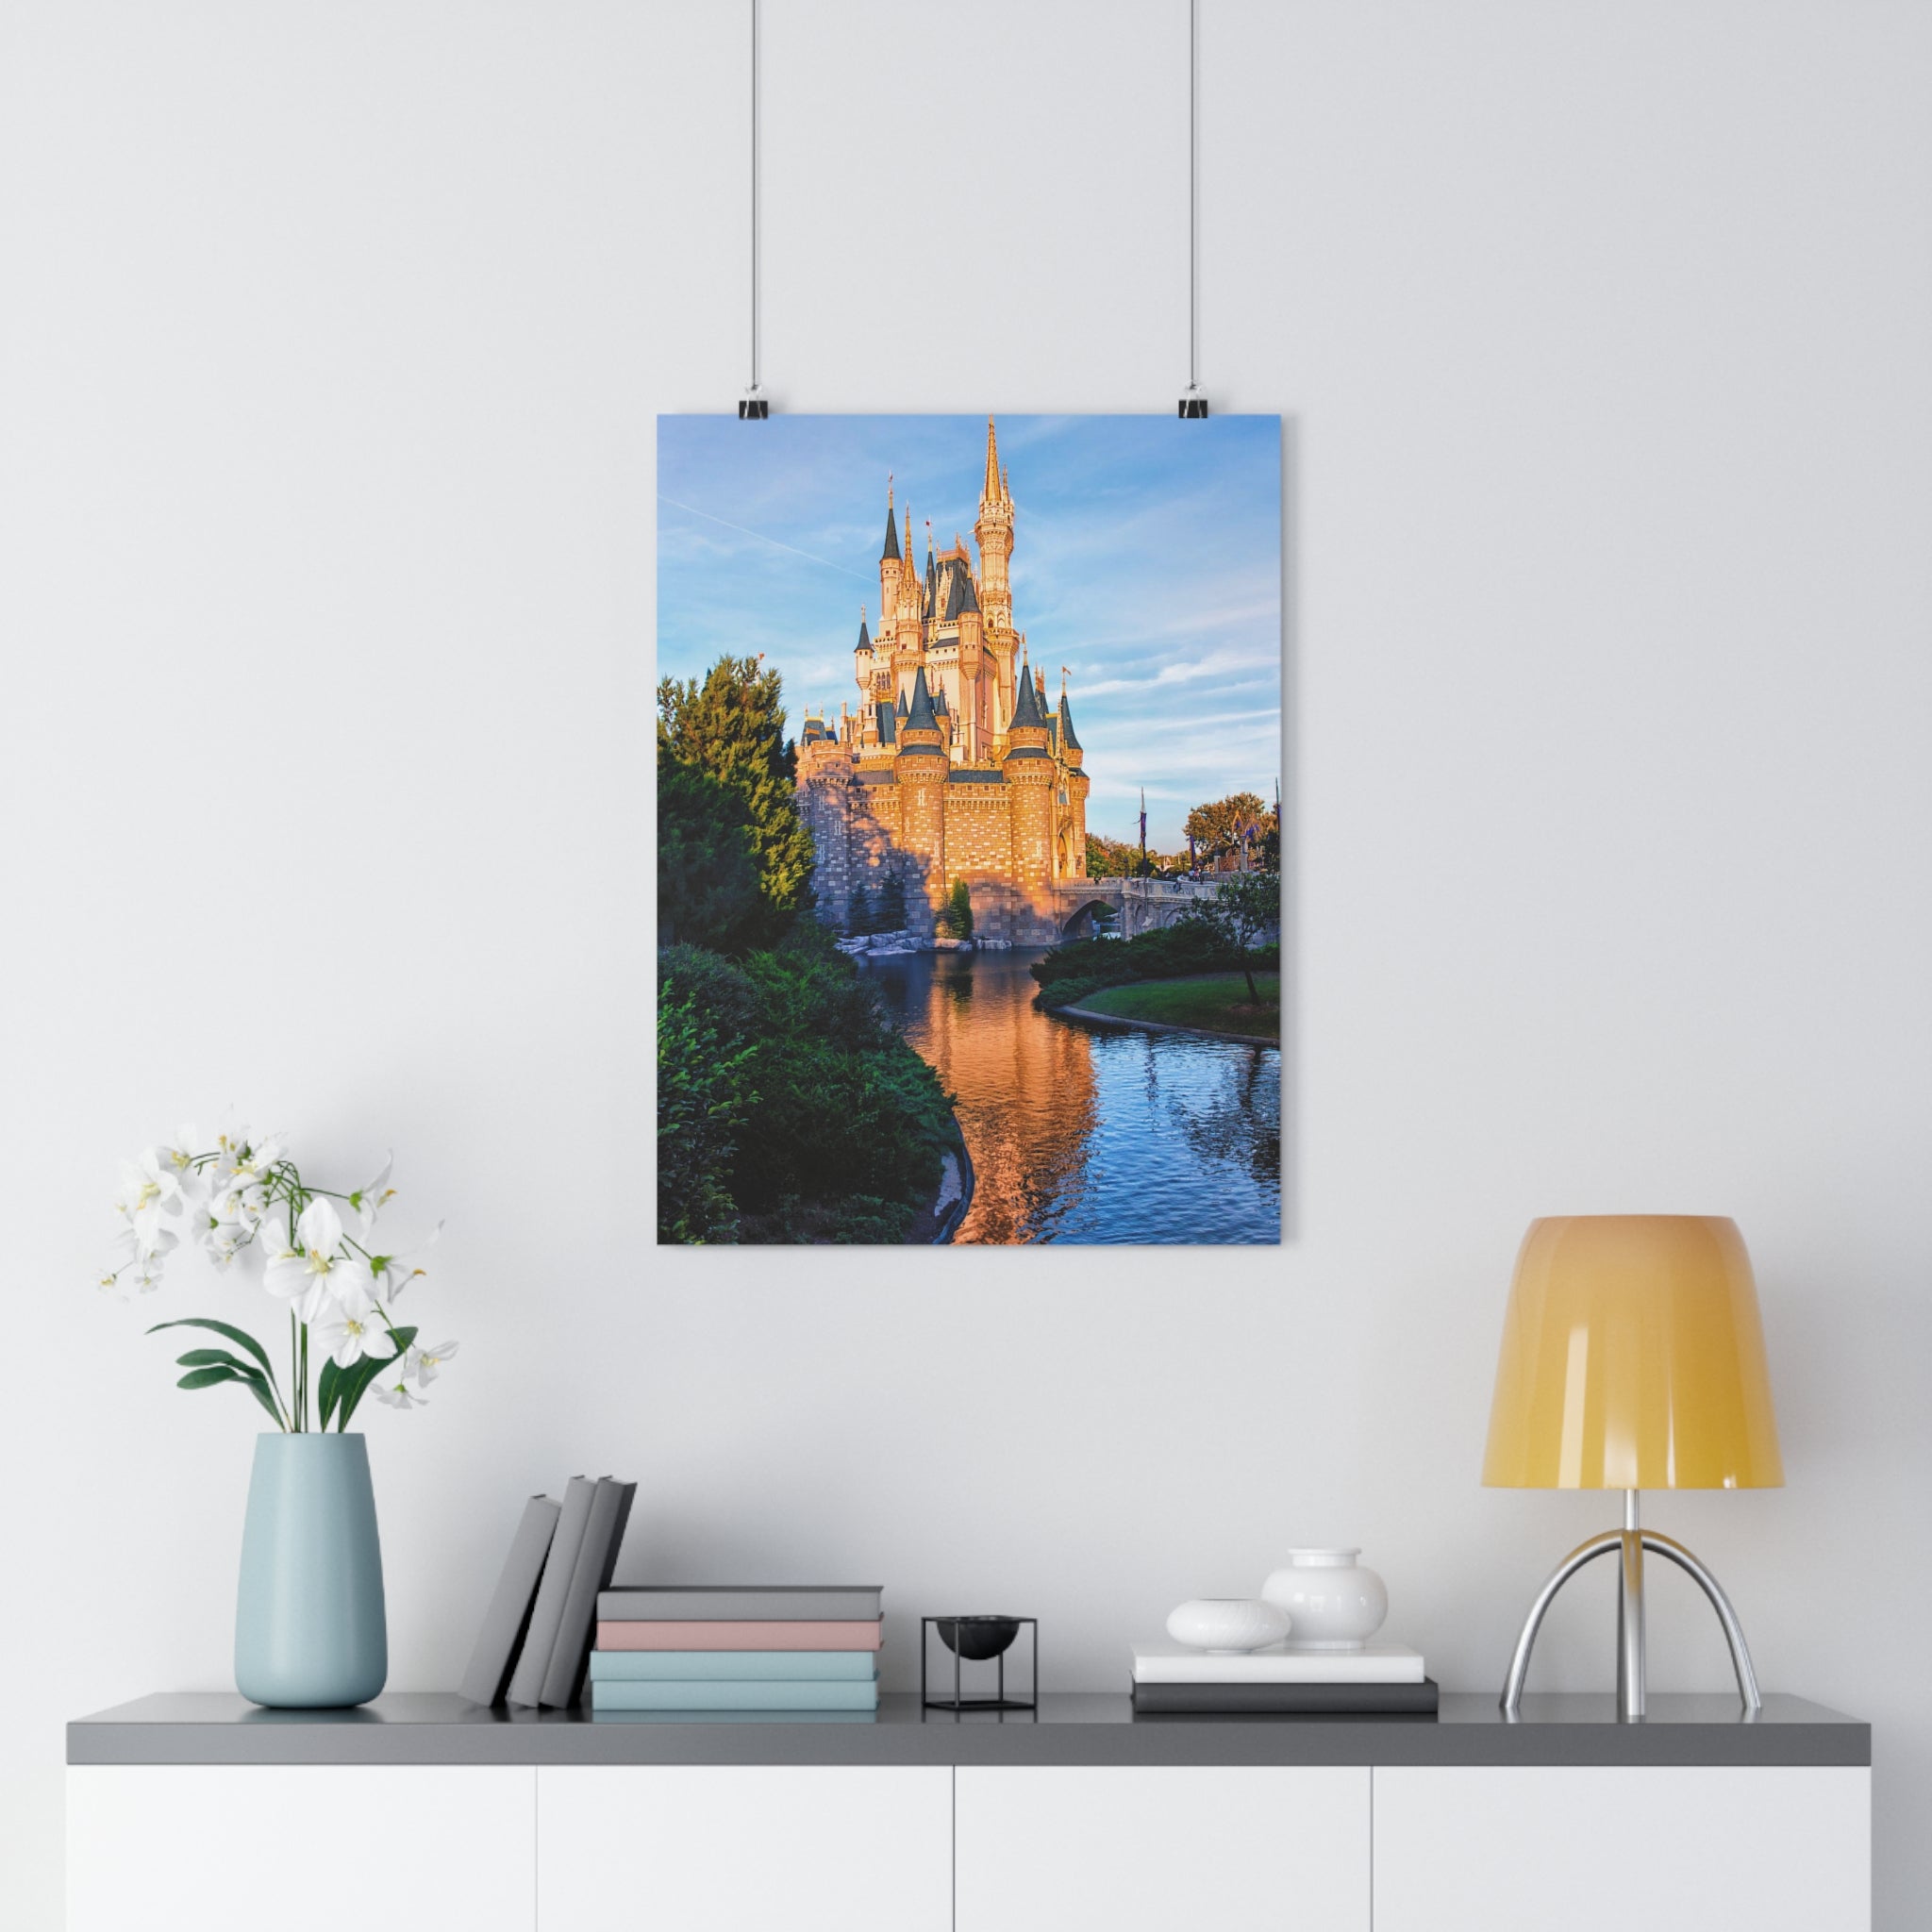 The Magic Kingdom Castle Print